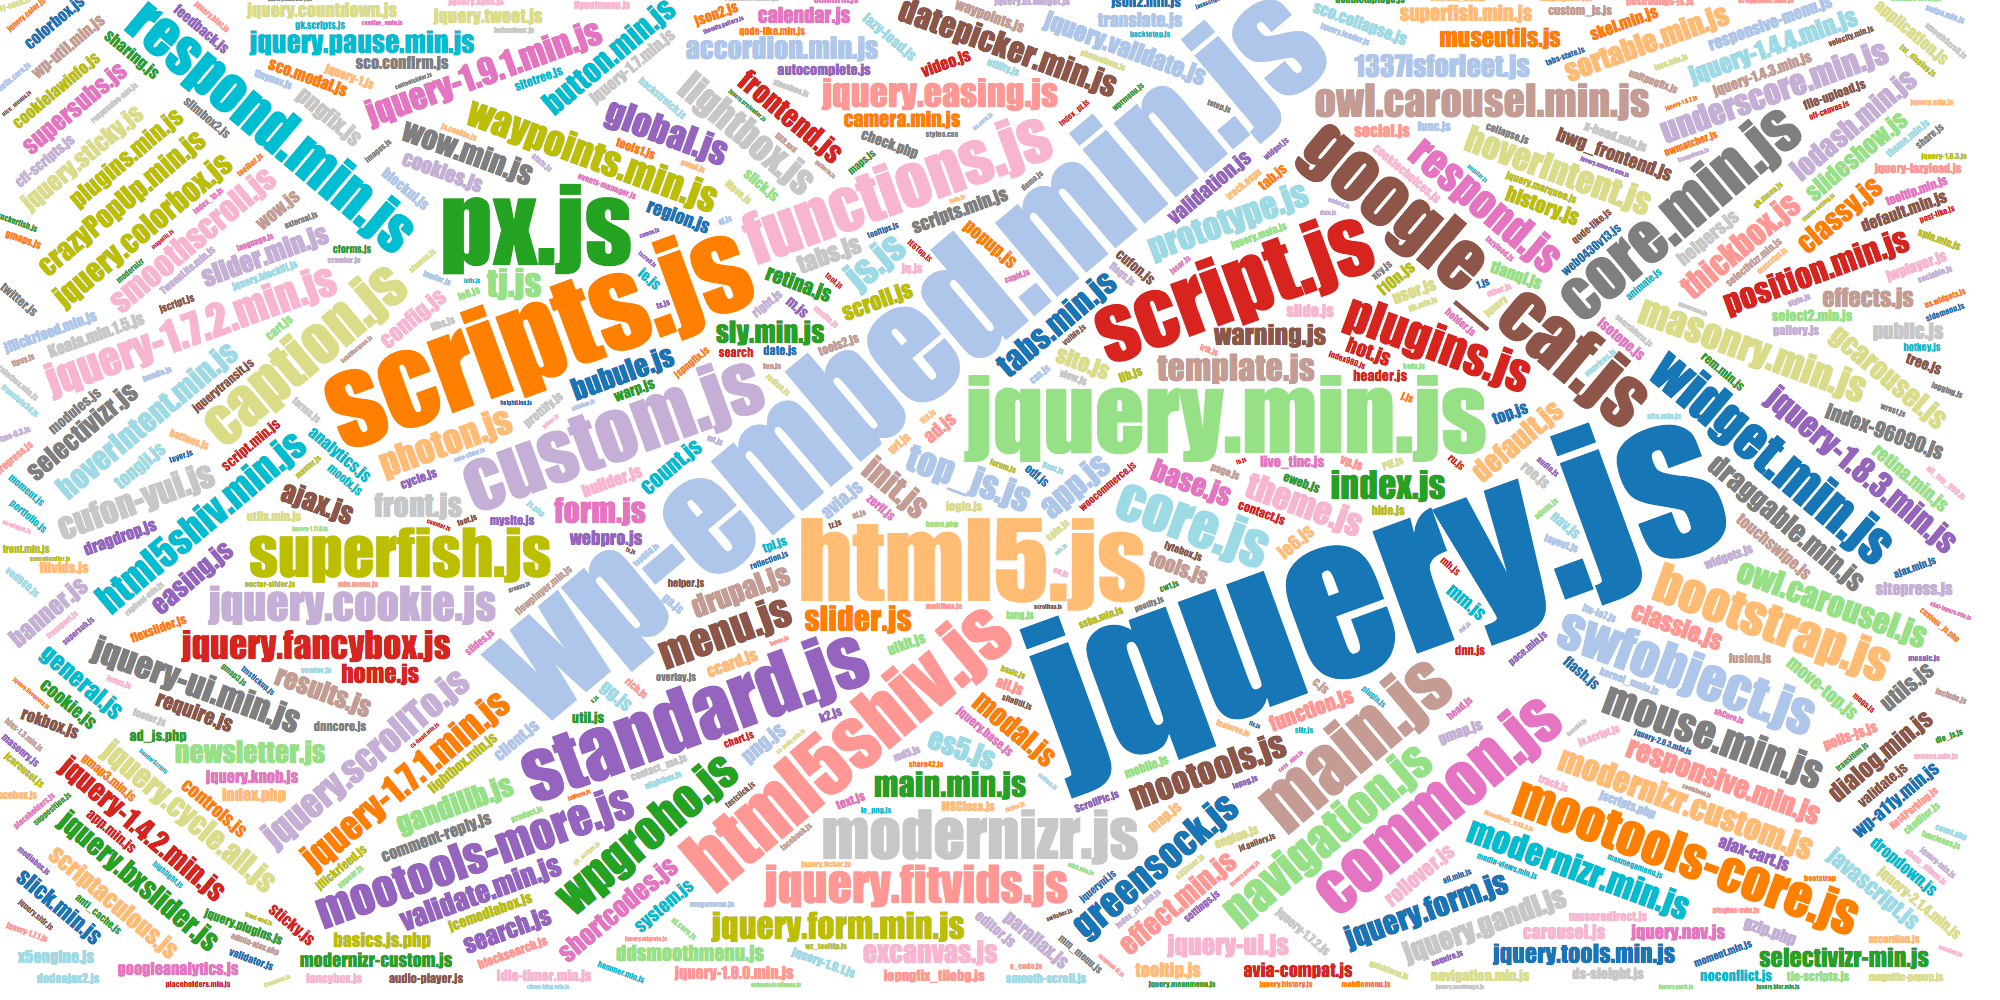 Popular names of JS files gprofiles.js, global.js, etc.